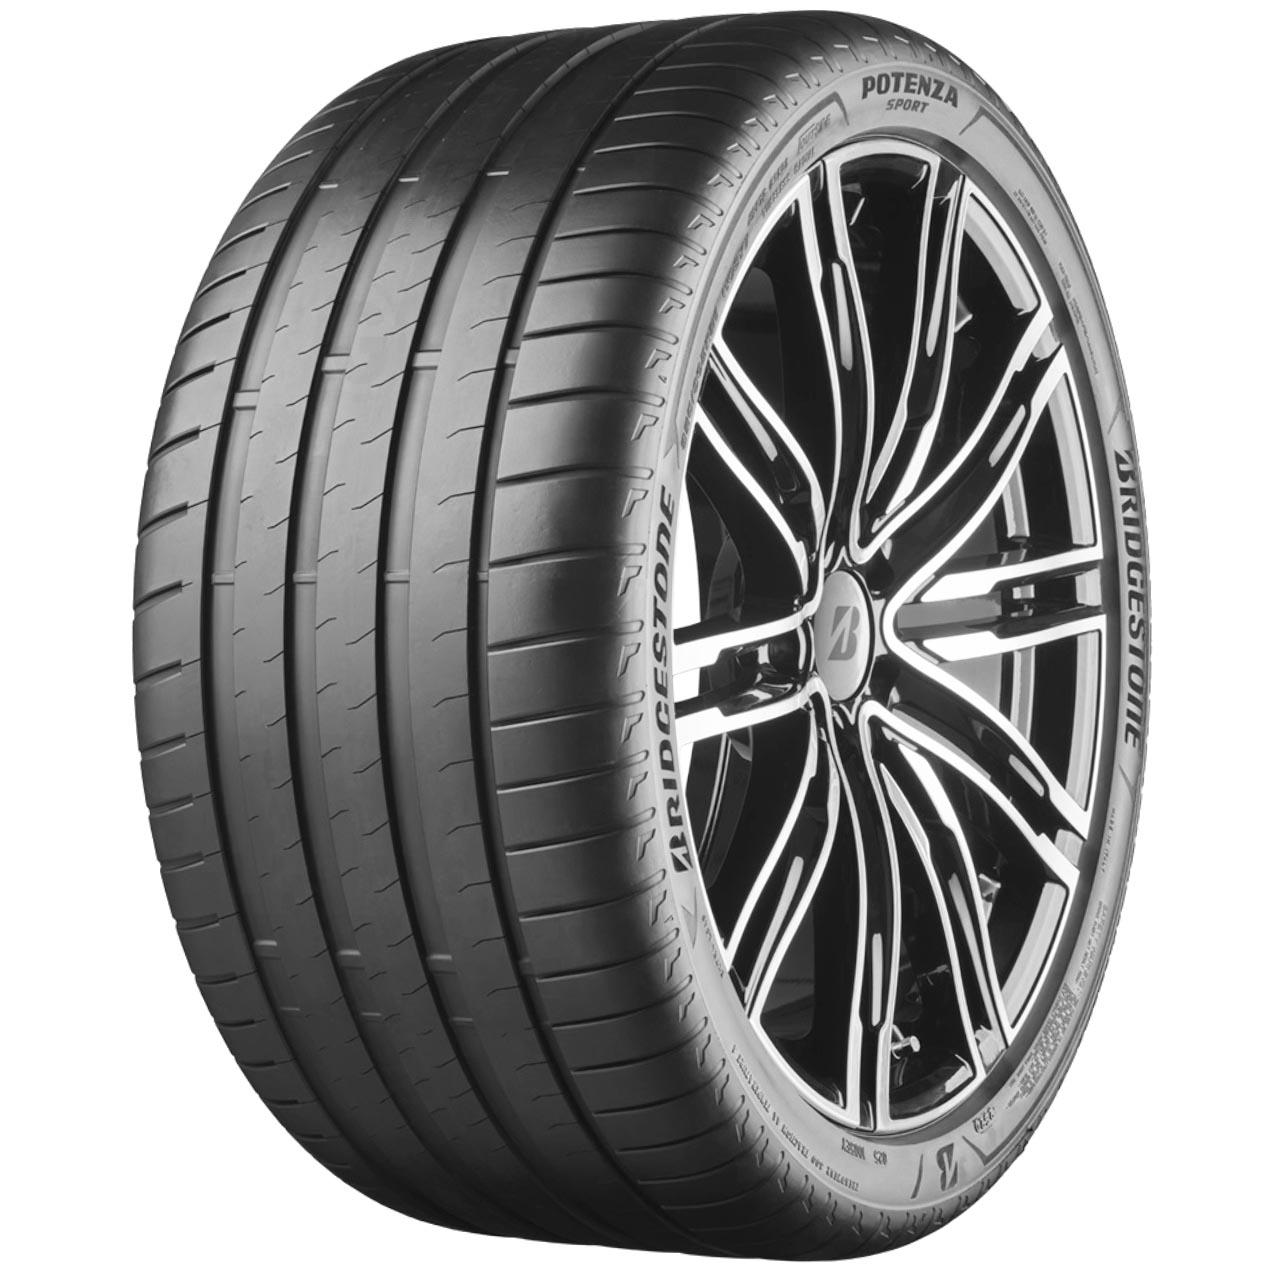 Bridgestone Potenza Sport 245/35R18 92Y XL MFS